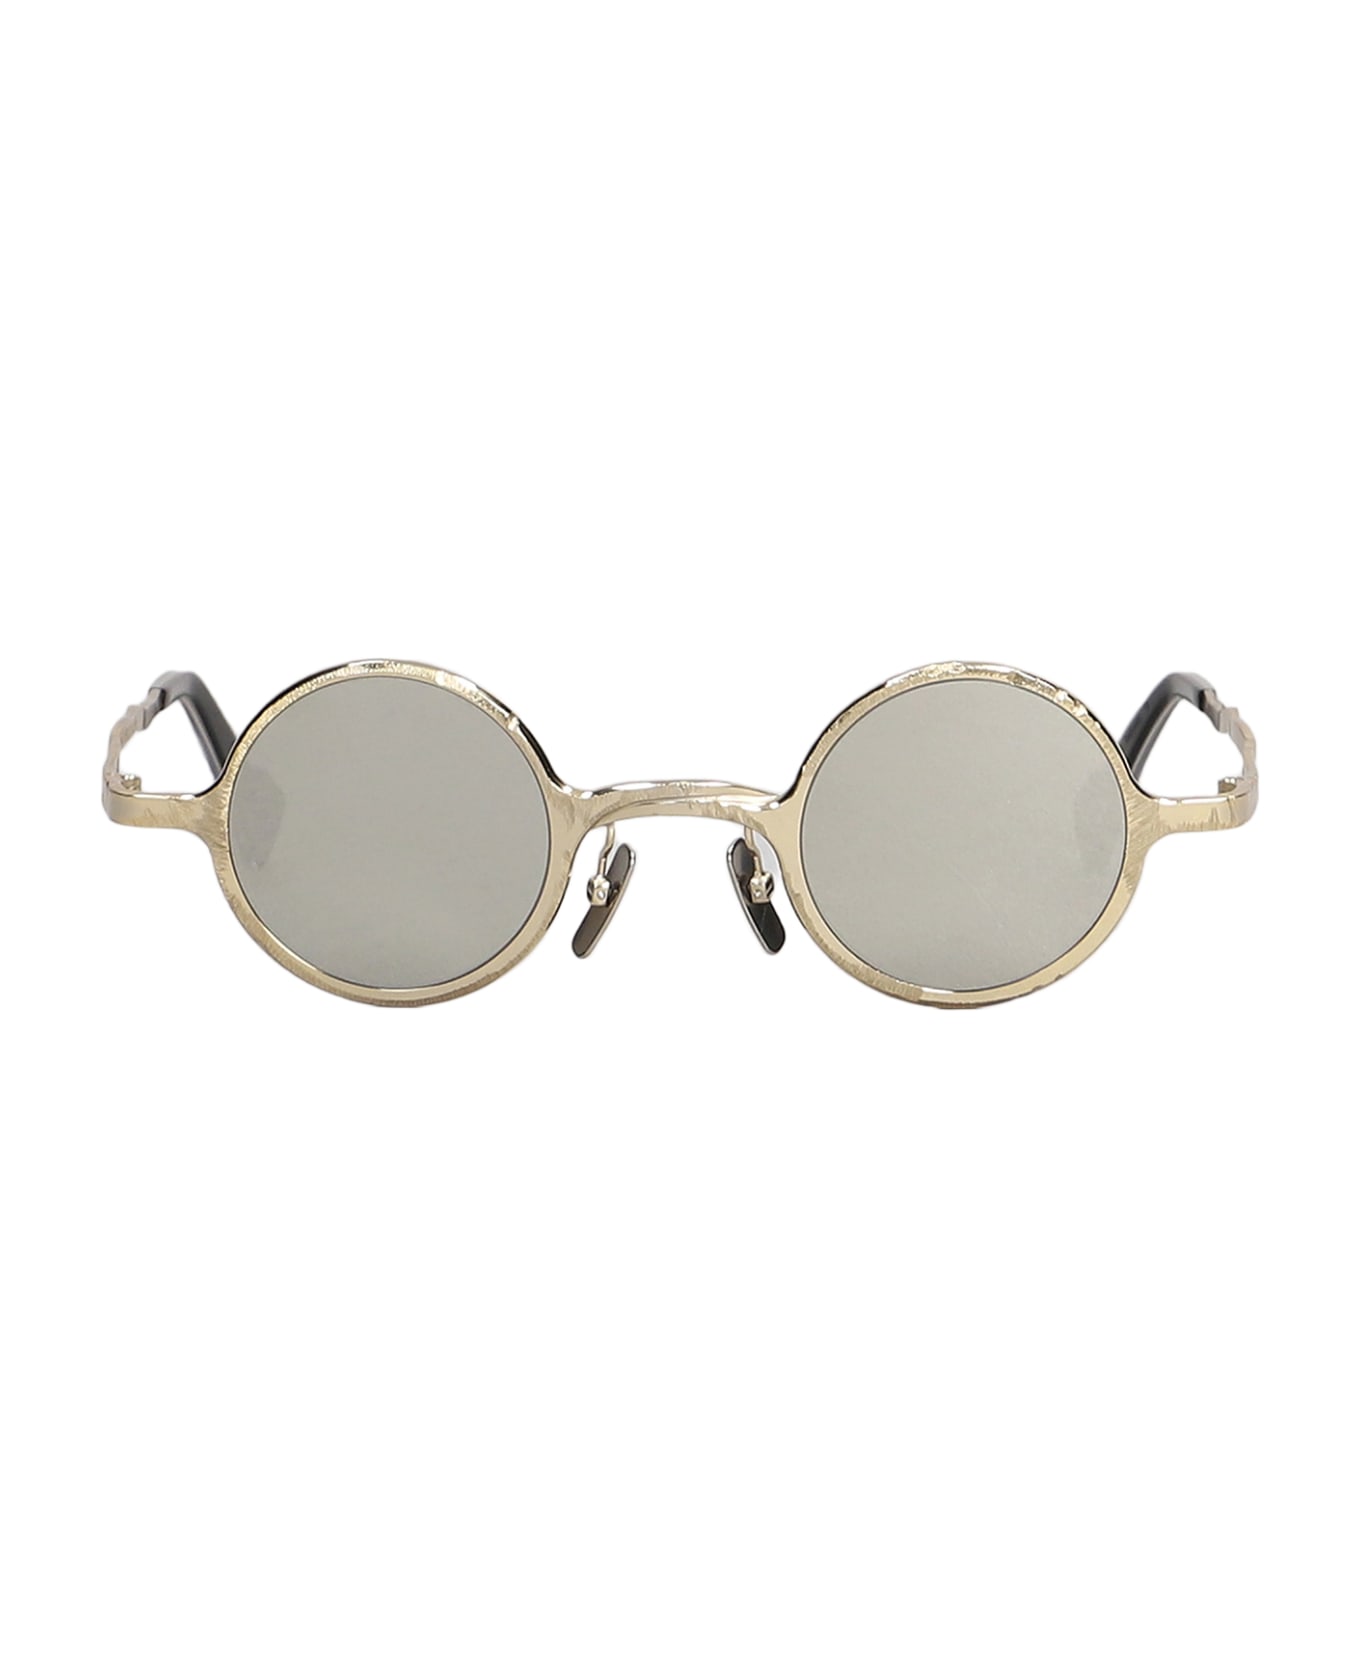 Kuboraum Z17 Sunglasses In Gold Metal Alloy - gold